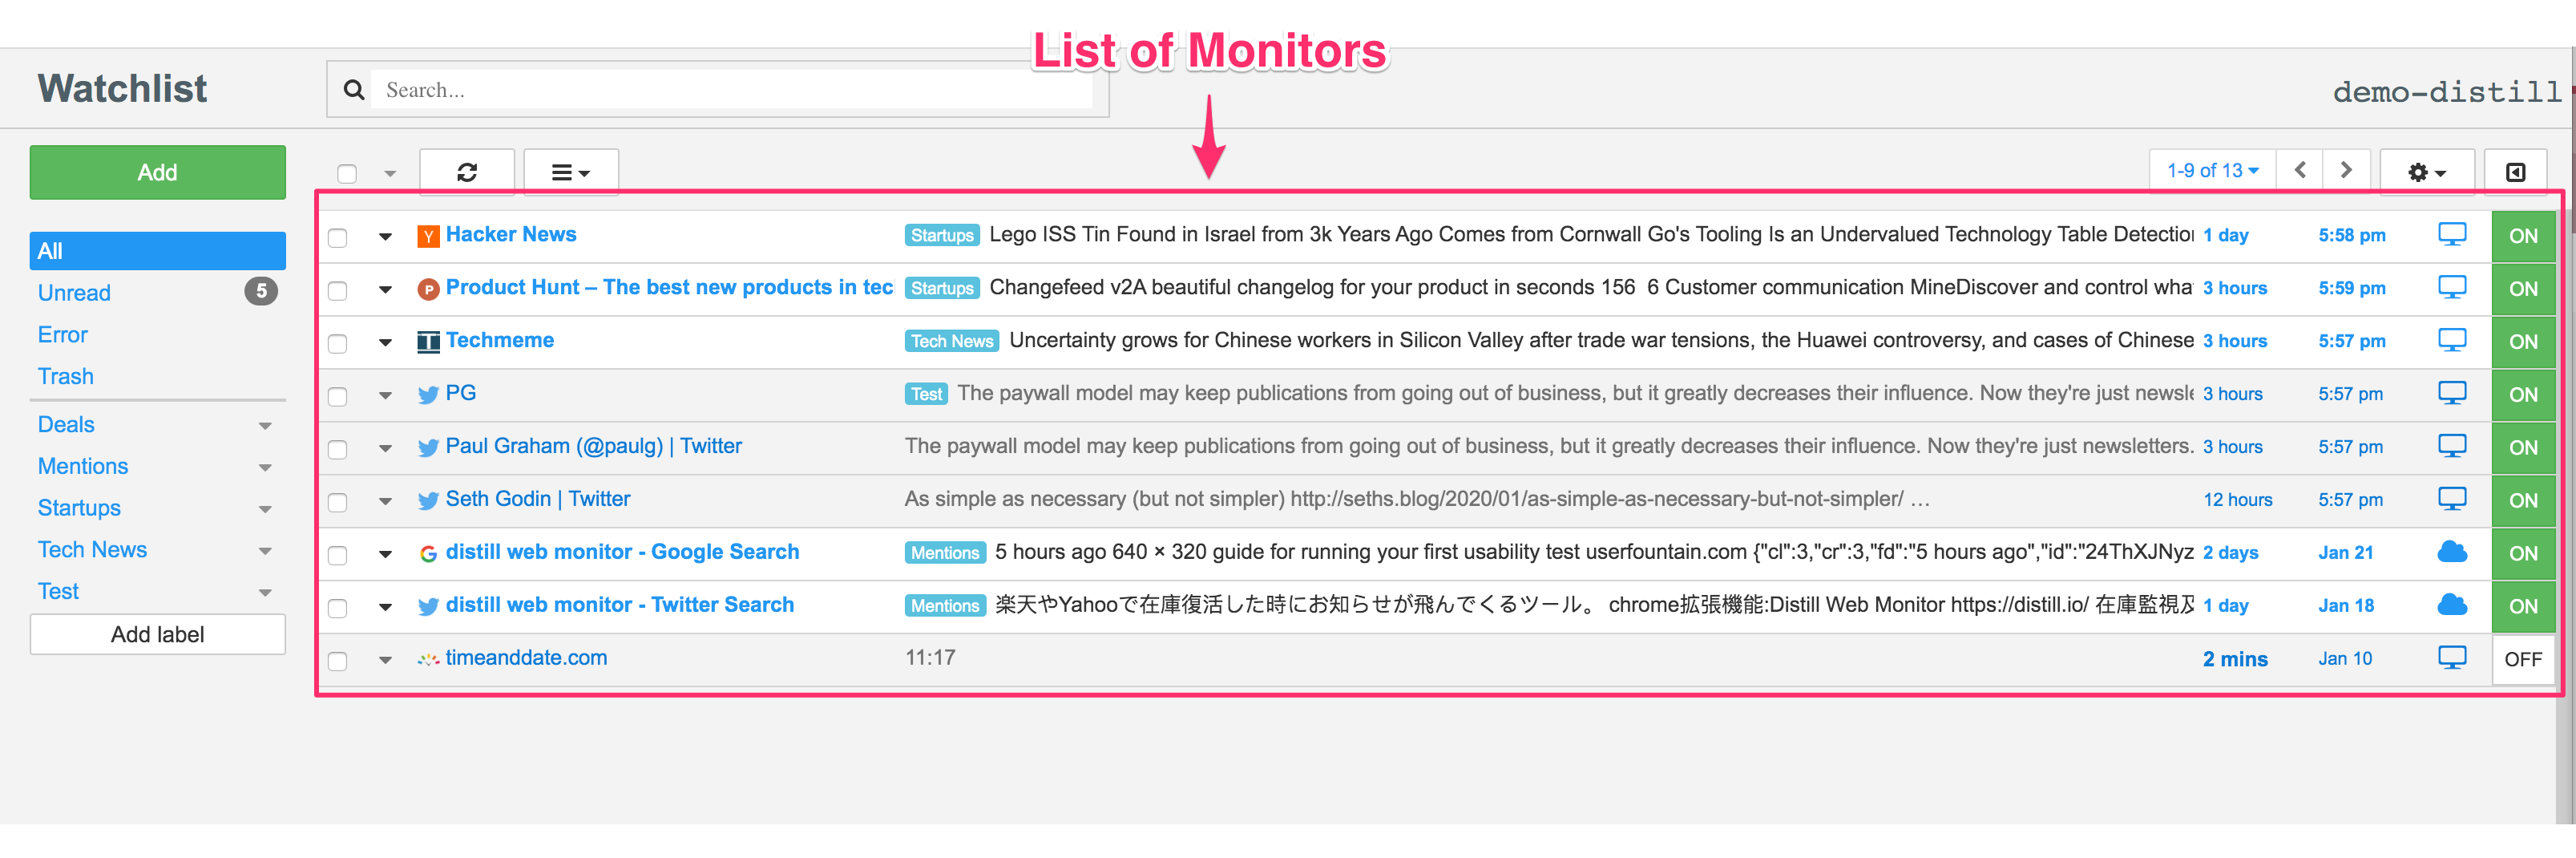 Watchlist - List of monitors